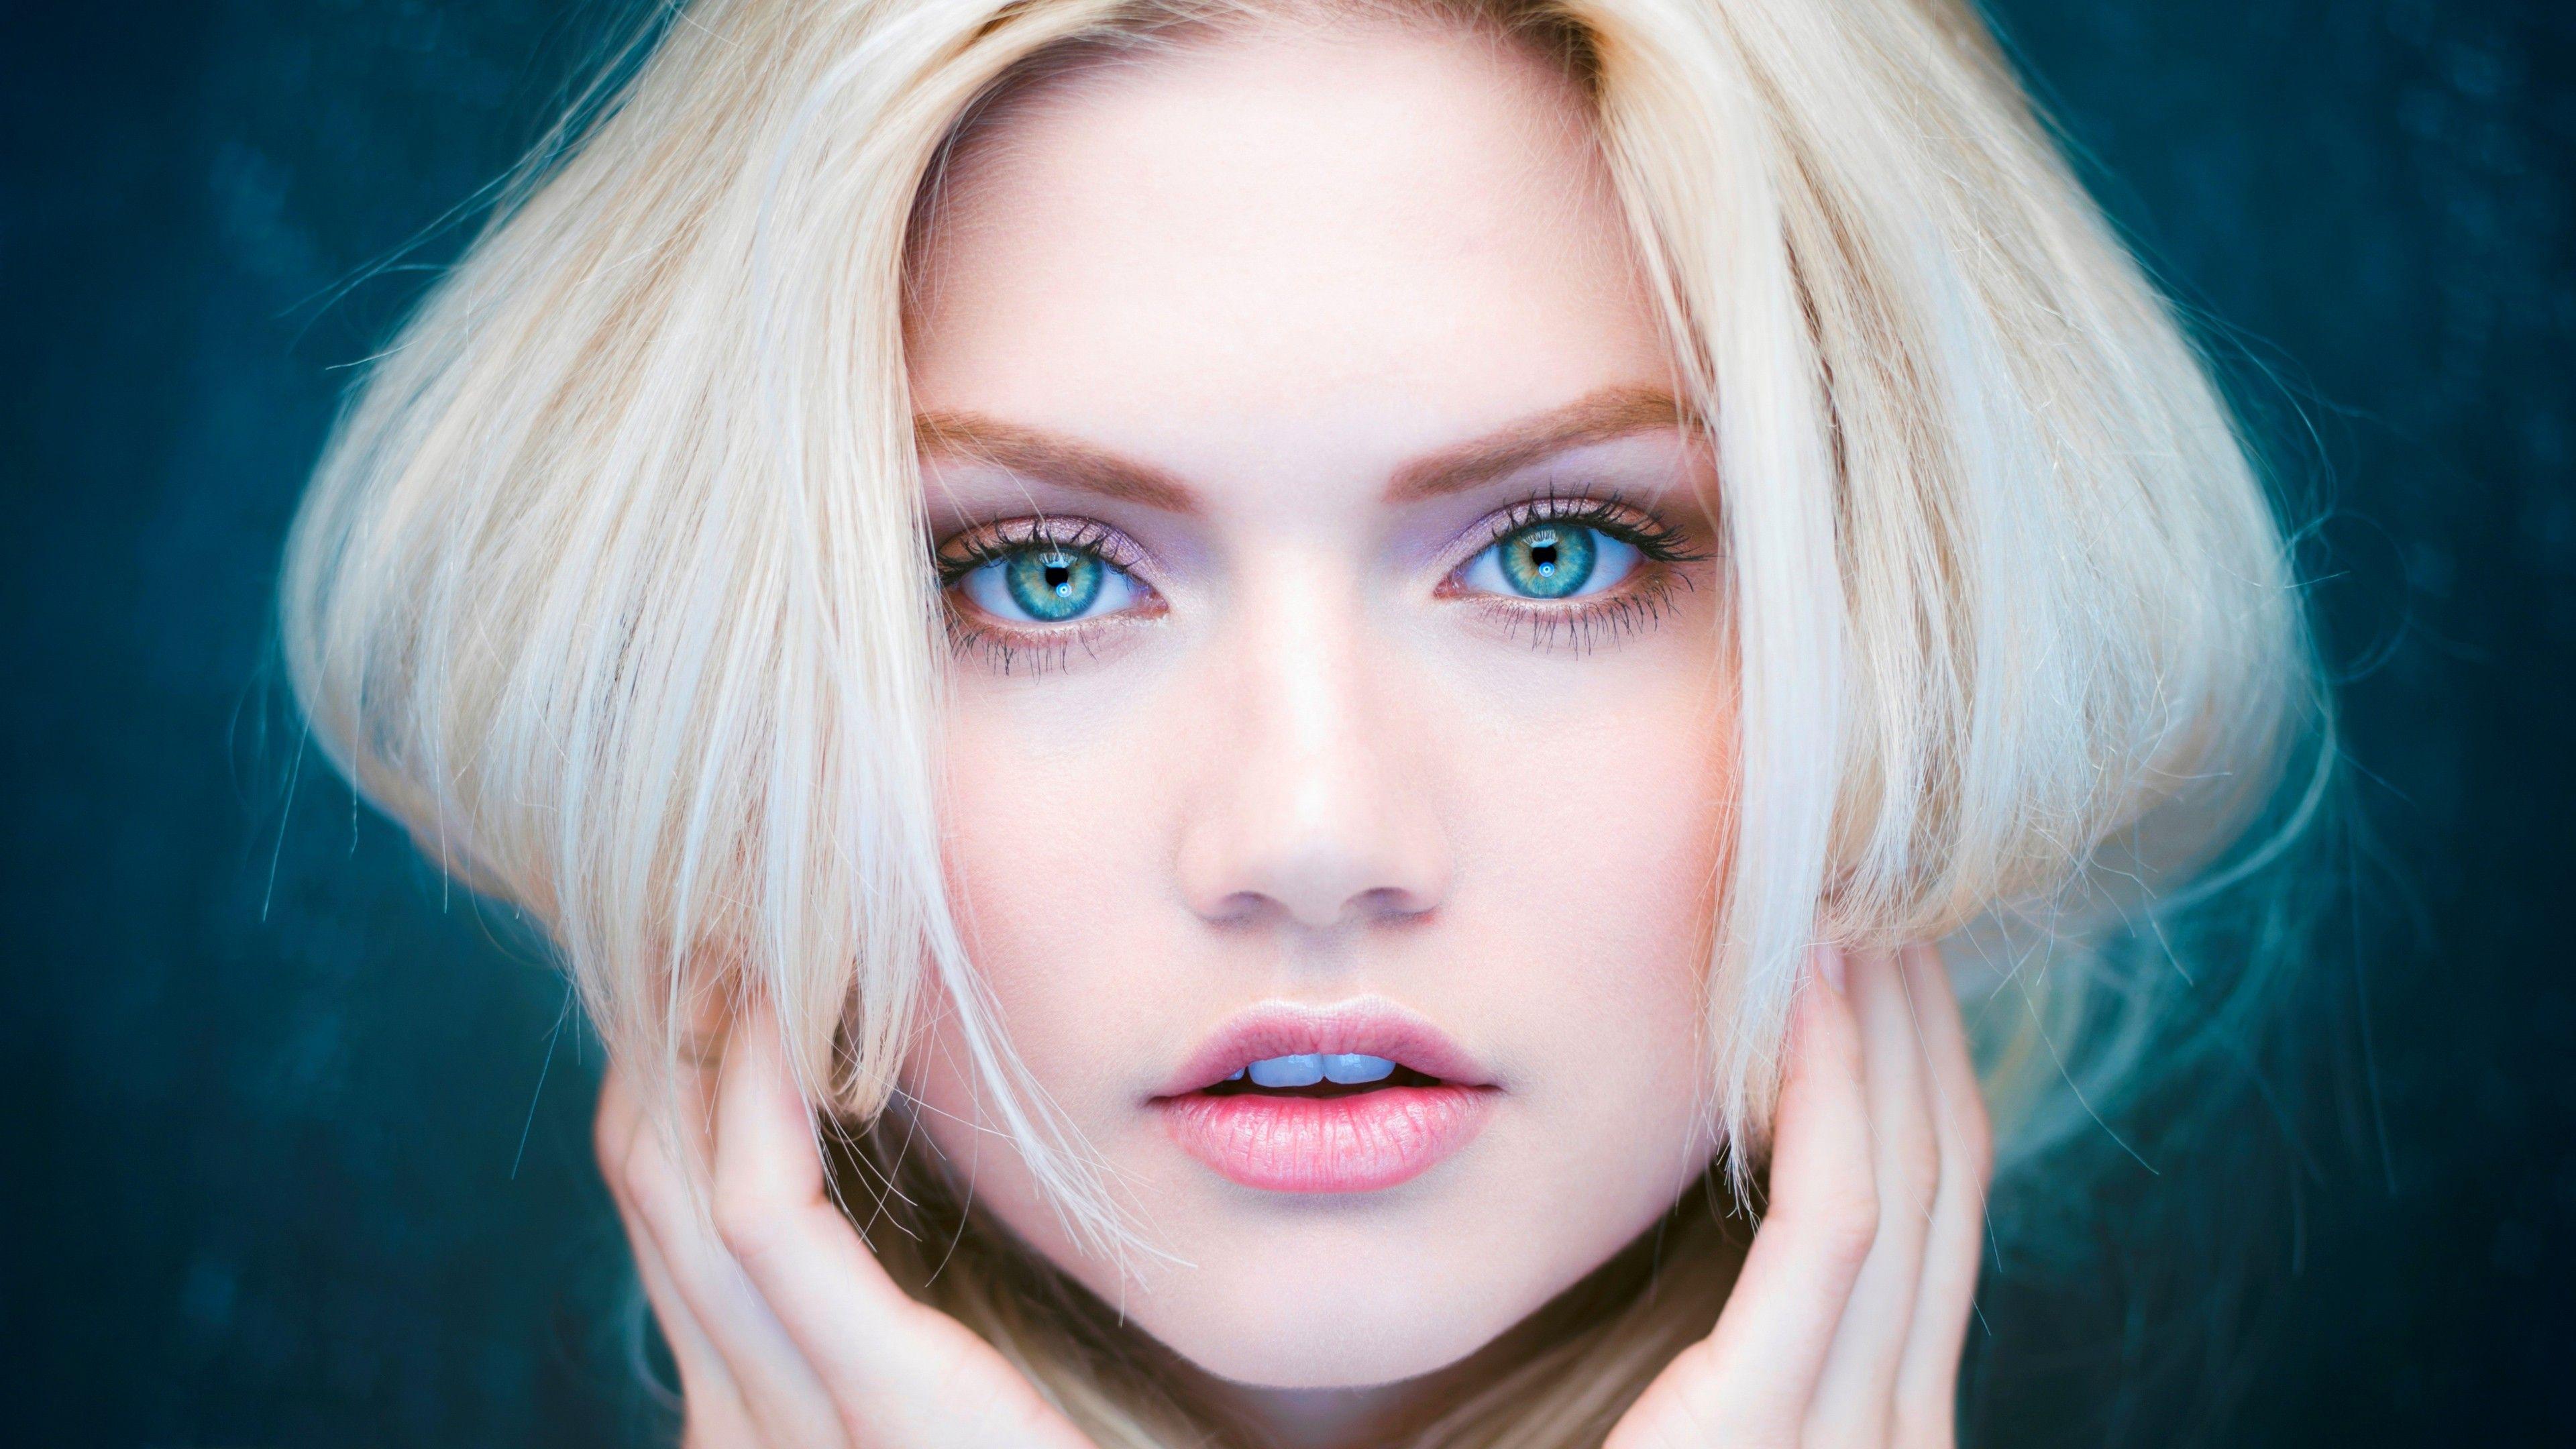 #Martina Dimitrova, #face, #closeup, #blue eyes, #blonde